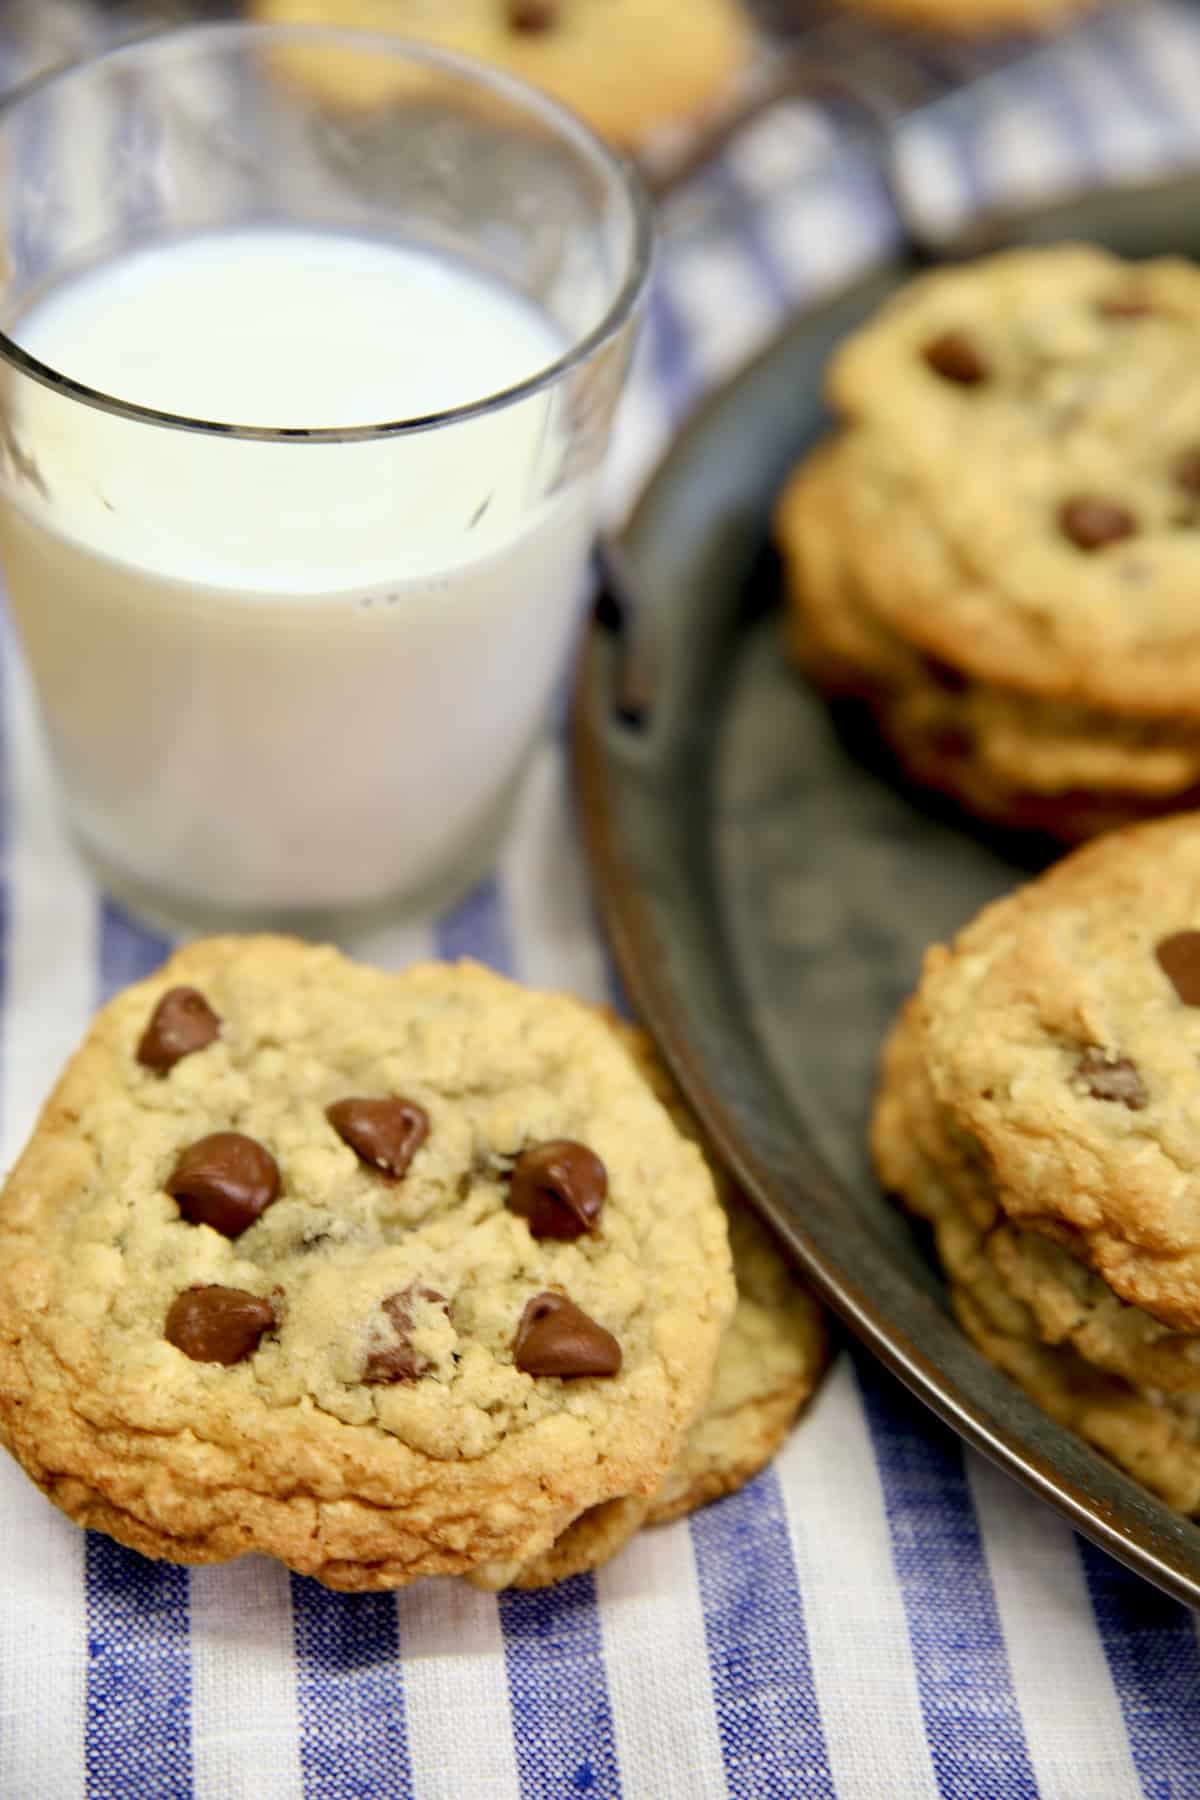 Cookies stacked in front of milk glass beside platter of cookies.